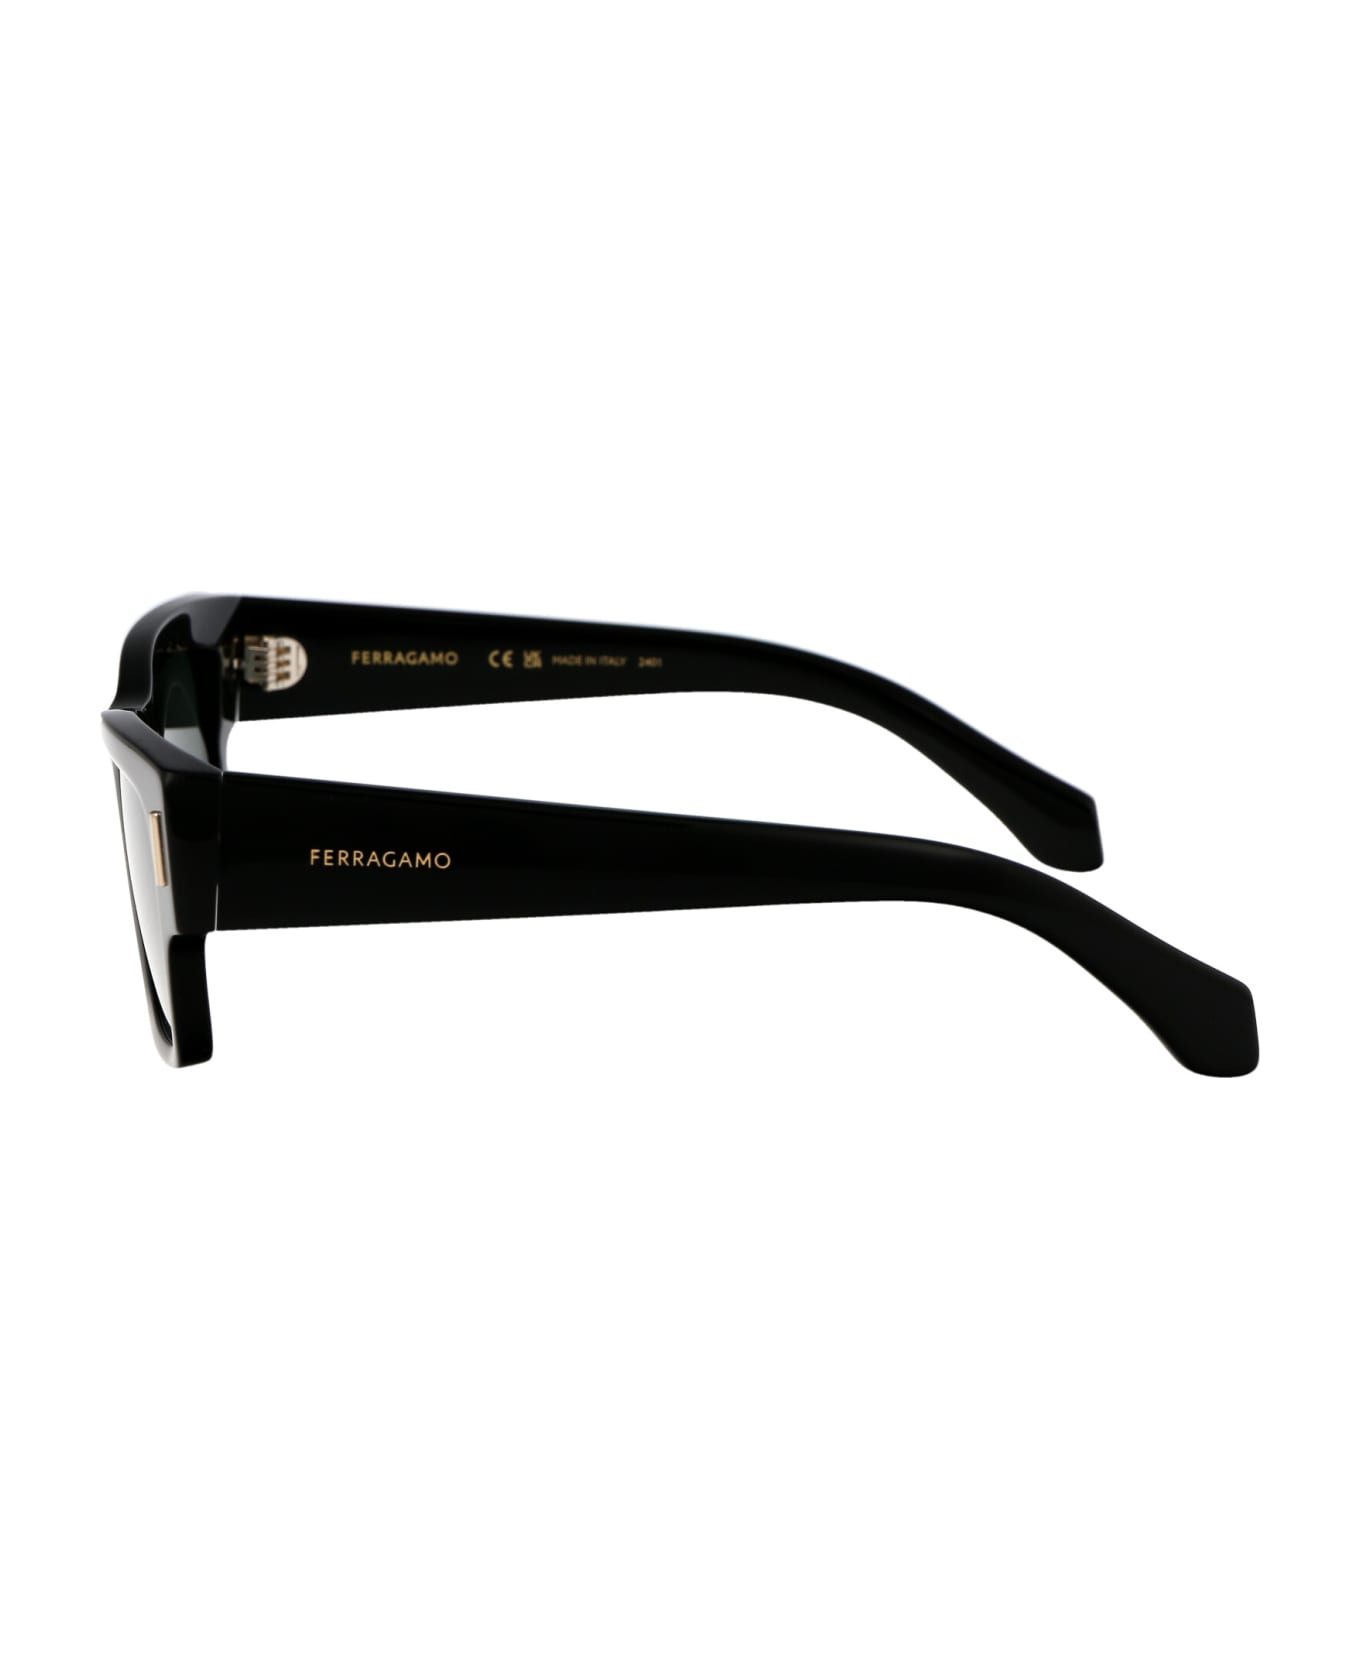 Salvatore Ferragamo Eyewear Sf2011s Sunglasses - 001 BLACK